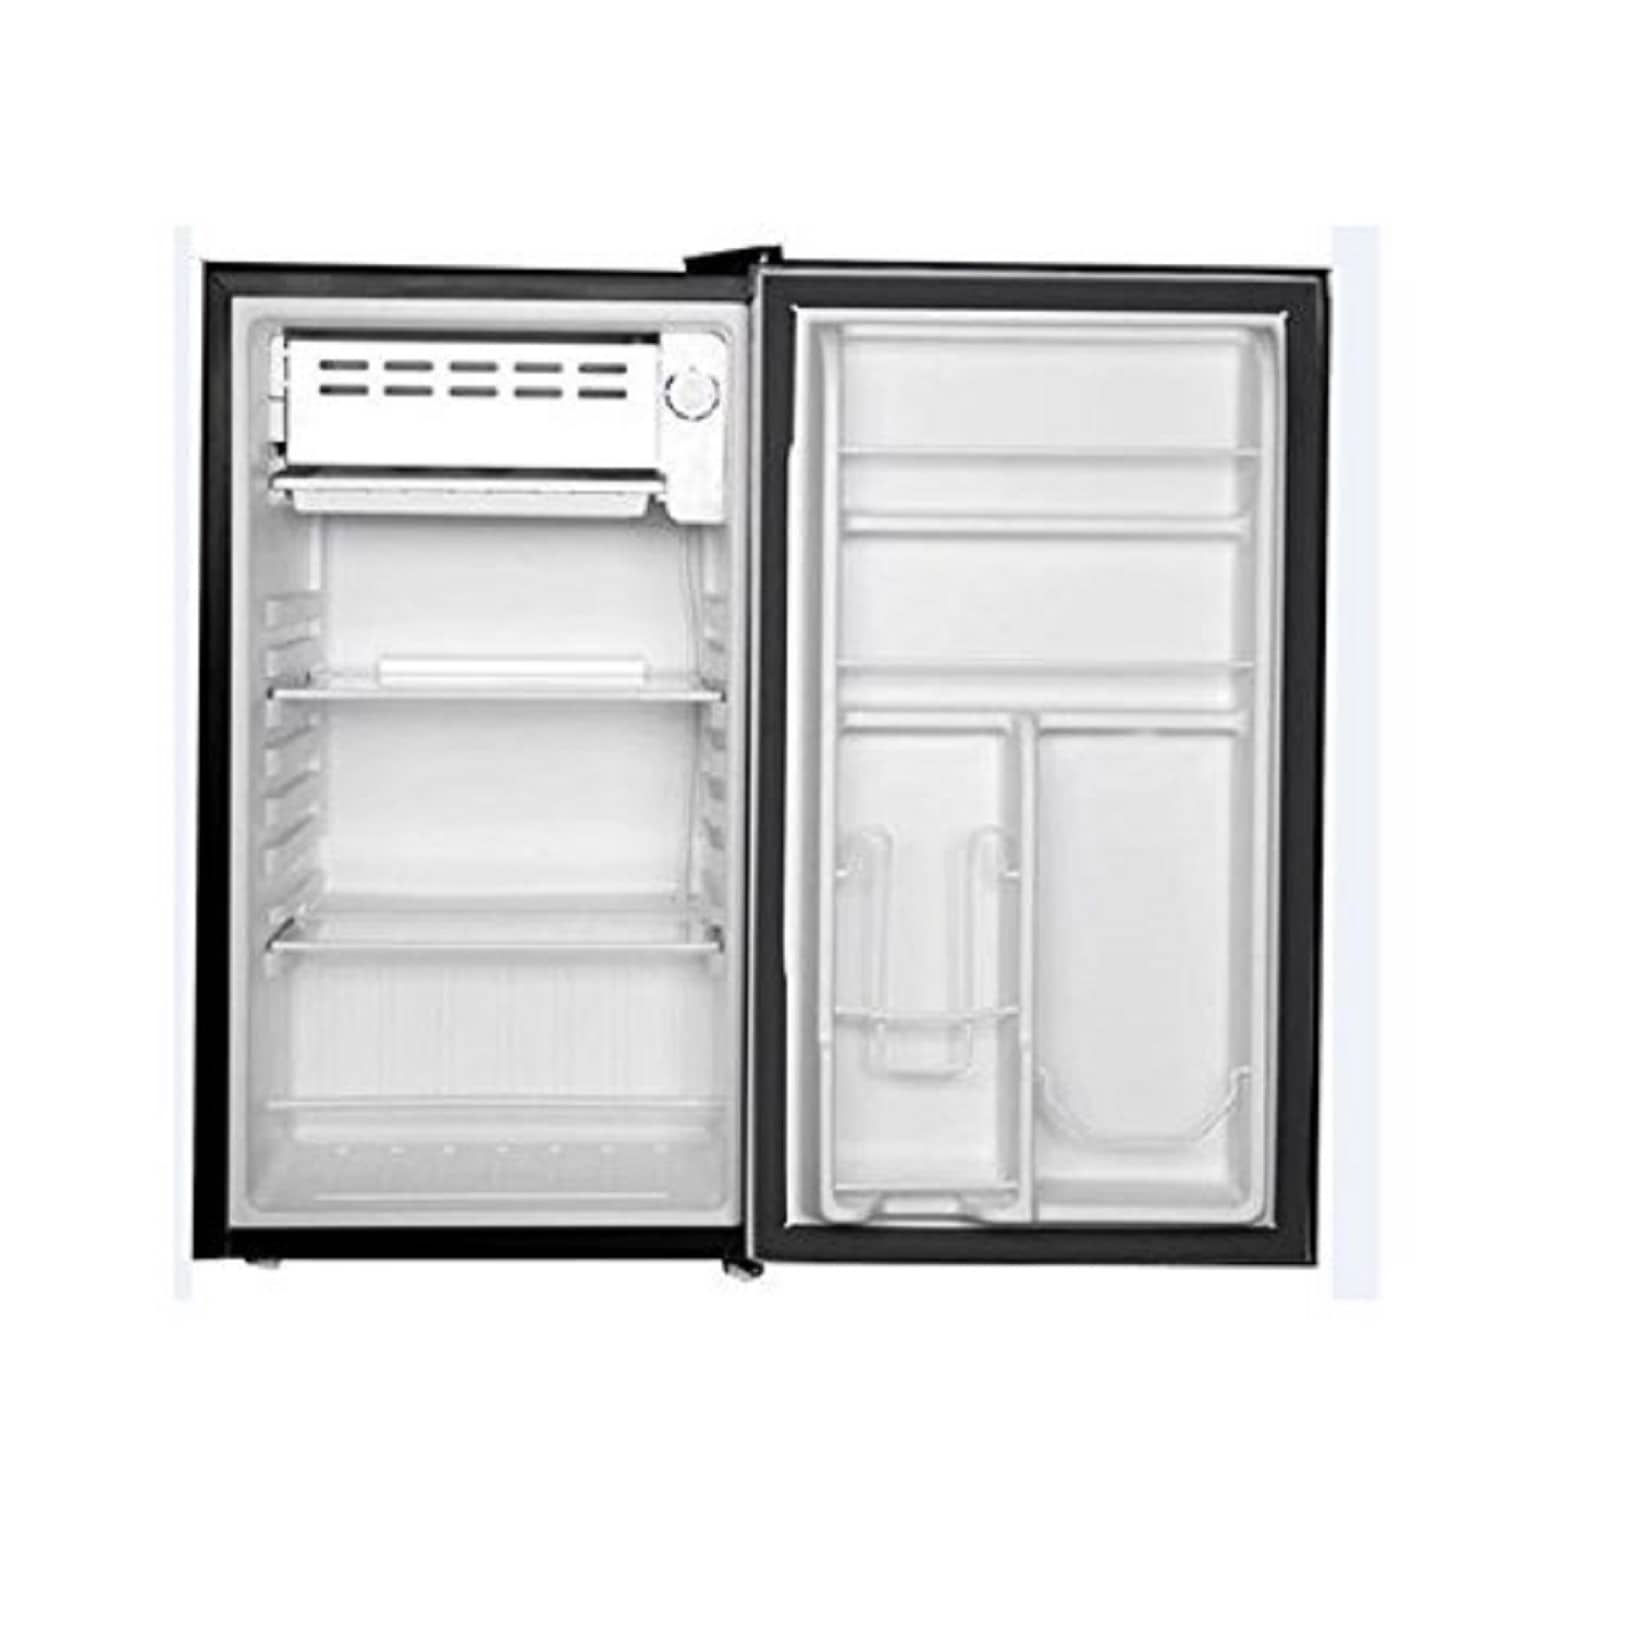 47+ Igloo 10 cu ft refrigerator ideas